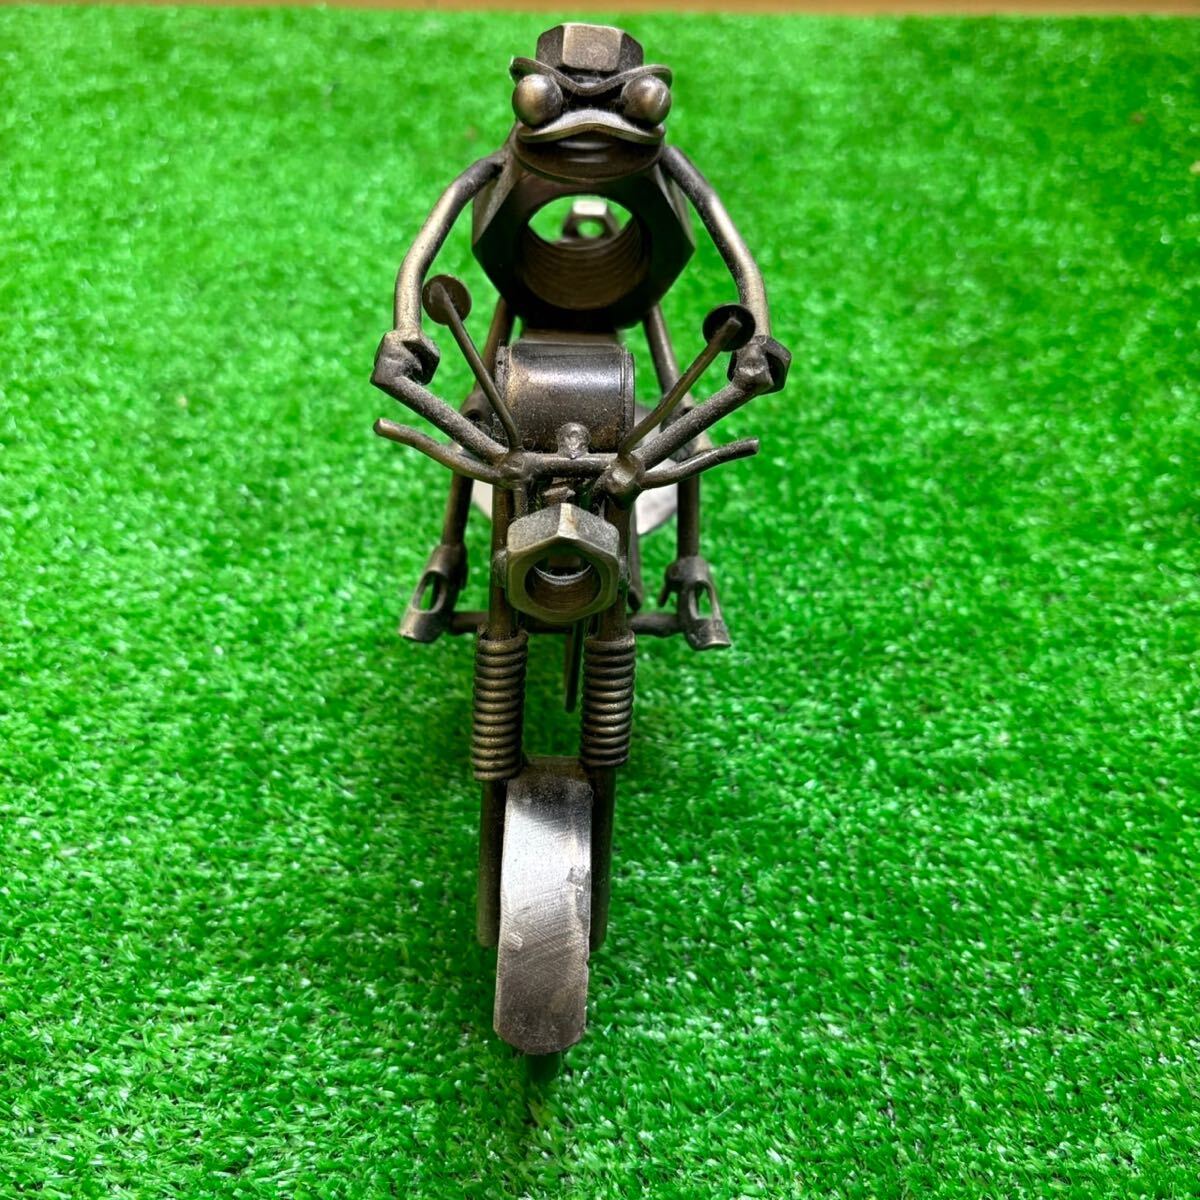  metal craft мотоцикл ... Junk искусство металл искусство металлический bike лягушка болт гайка интерьер смешанные товары украшение сувенир 